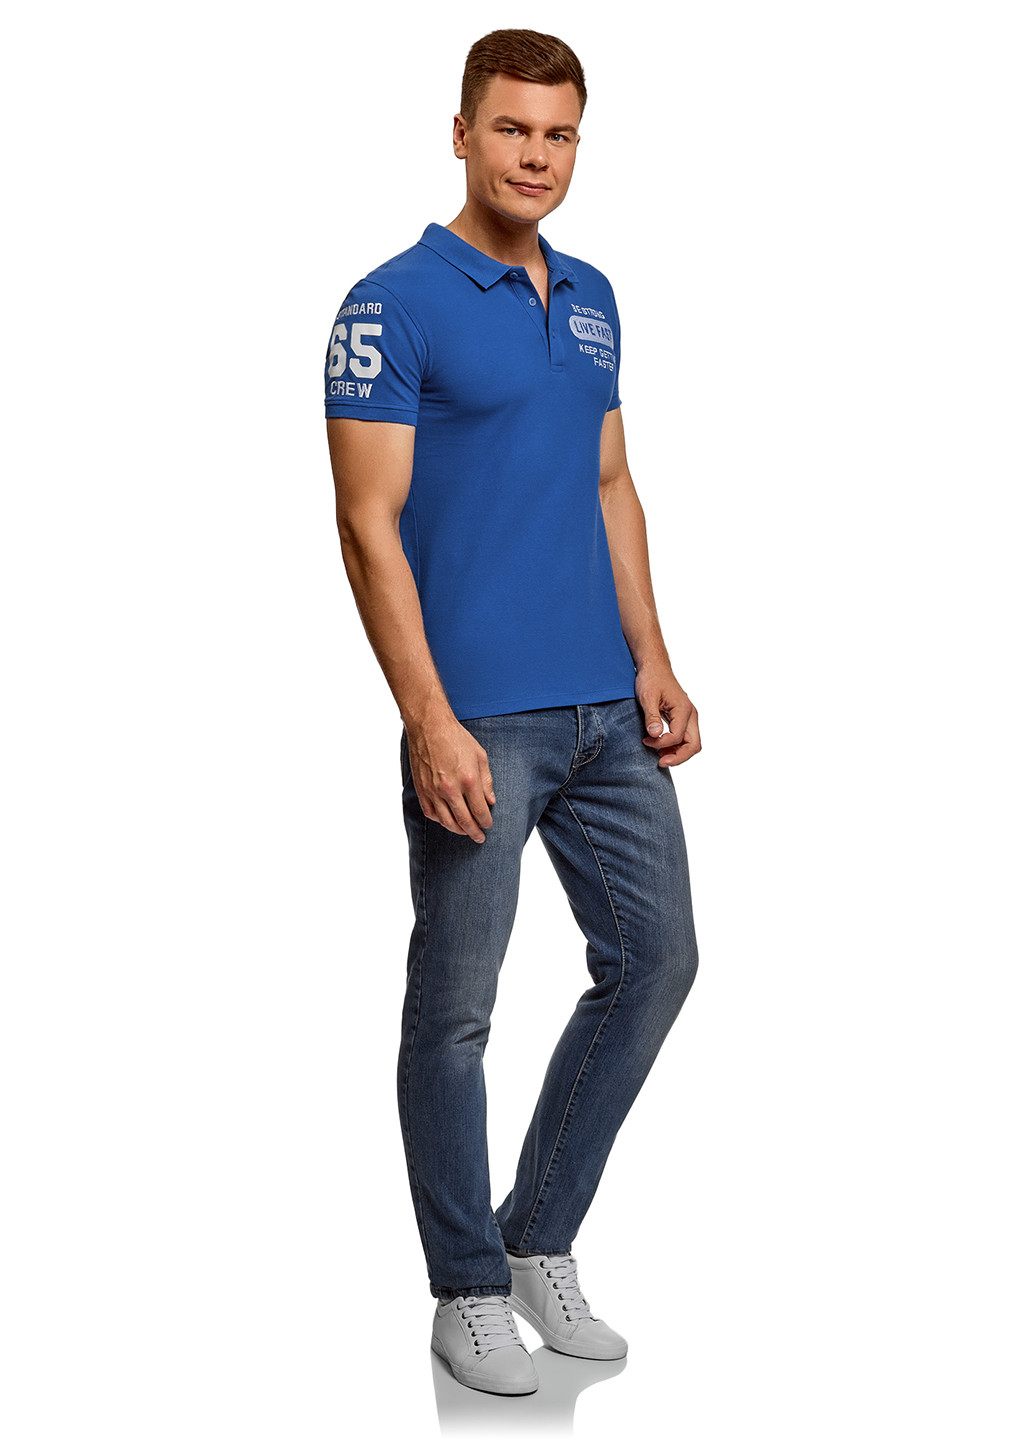 Синяя футболка-поло для мужчин Oodji с надписью